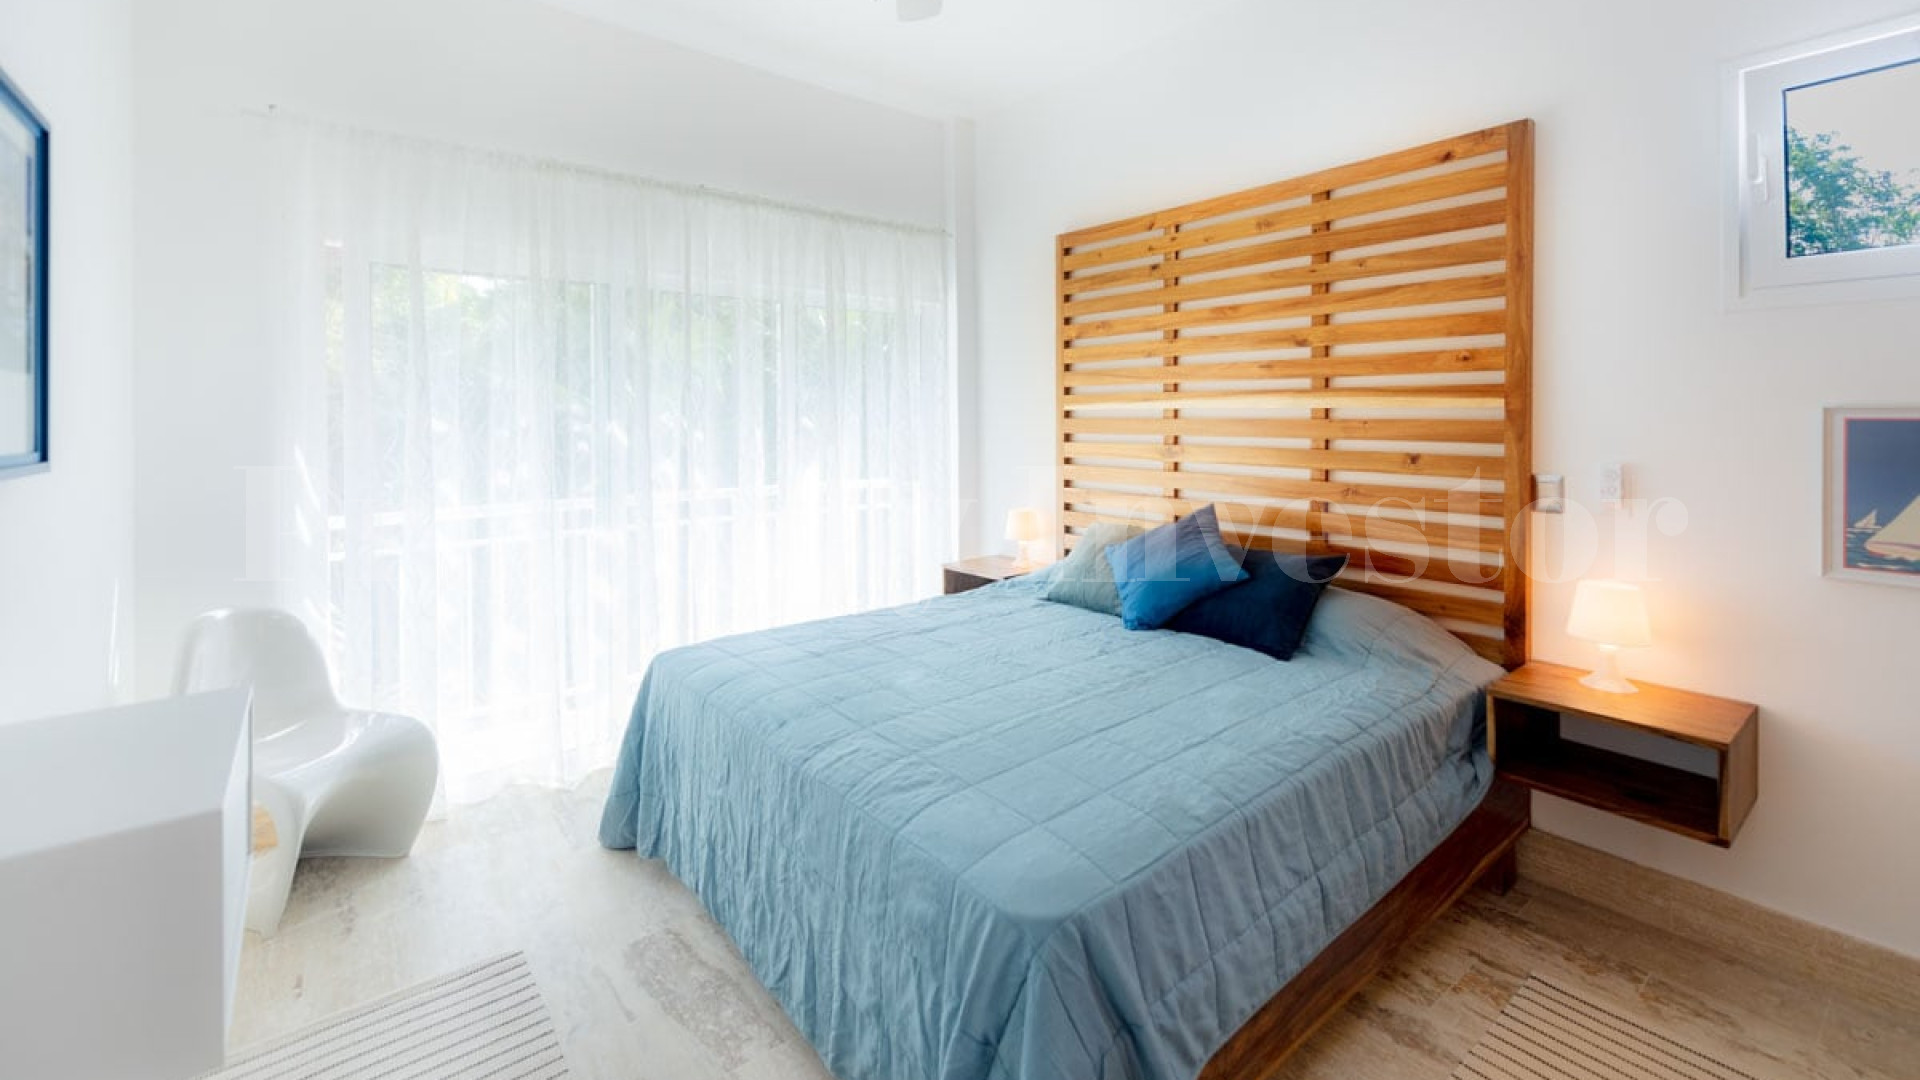 Luxury 3 Bedroom Penthouse Apartment in Playa Bonita (Penthouse 4A3)